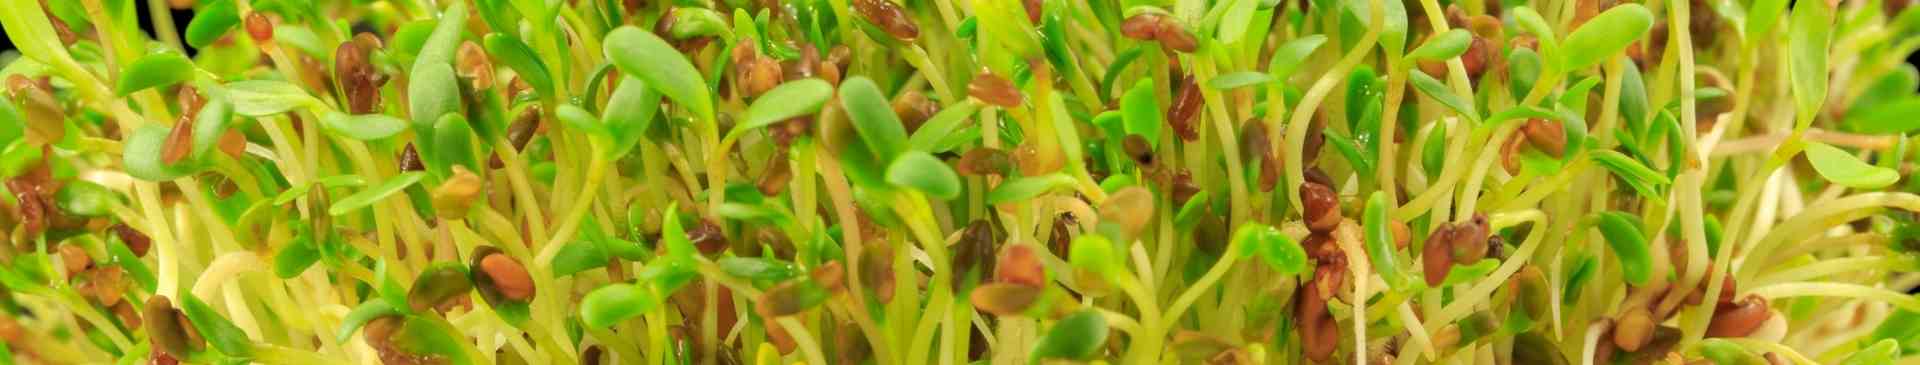 Grow Your Own Alfalfa Seeds